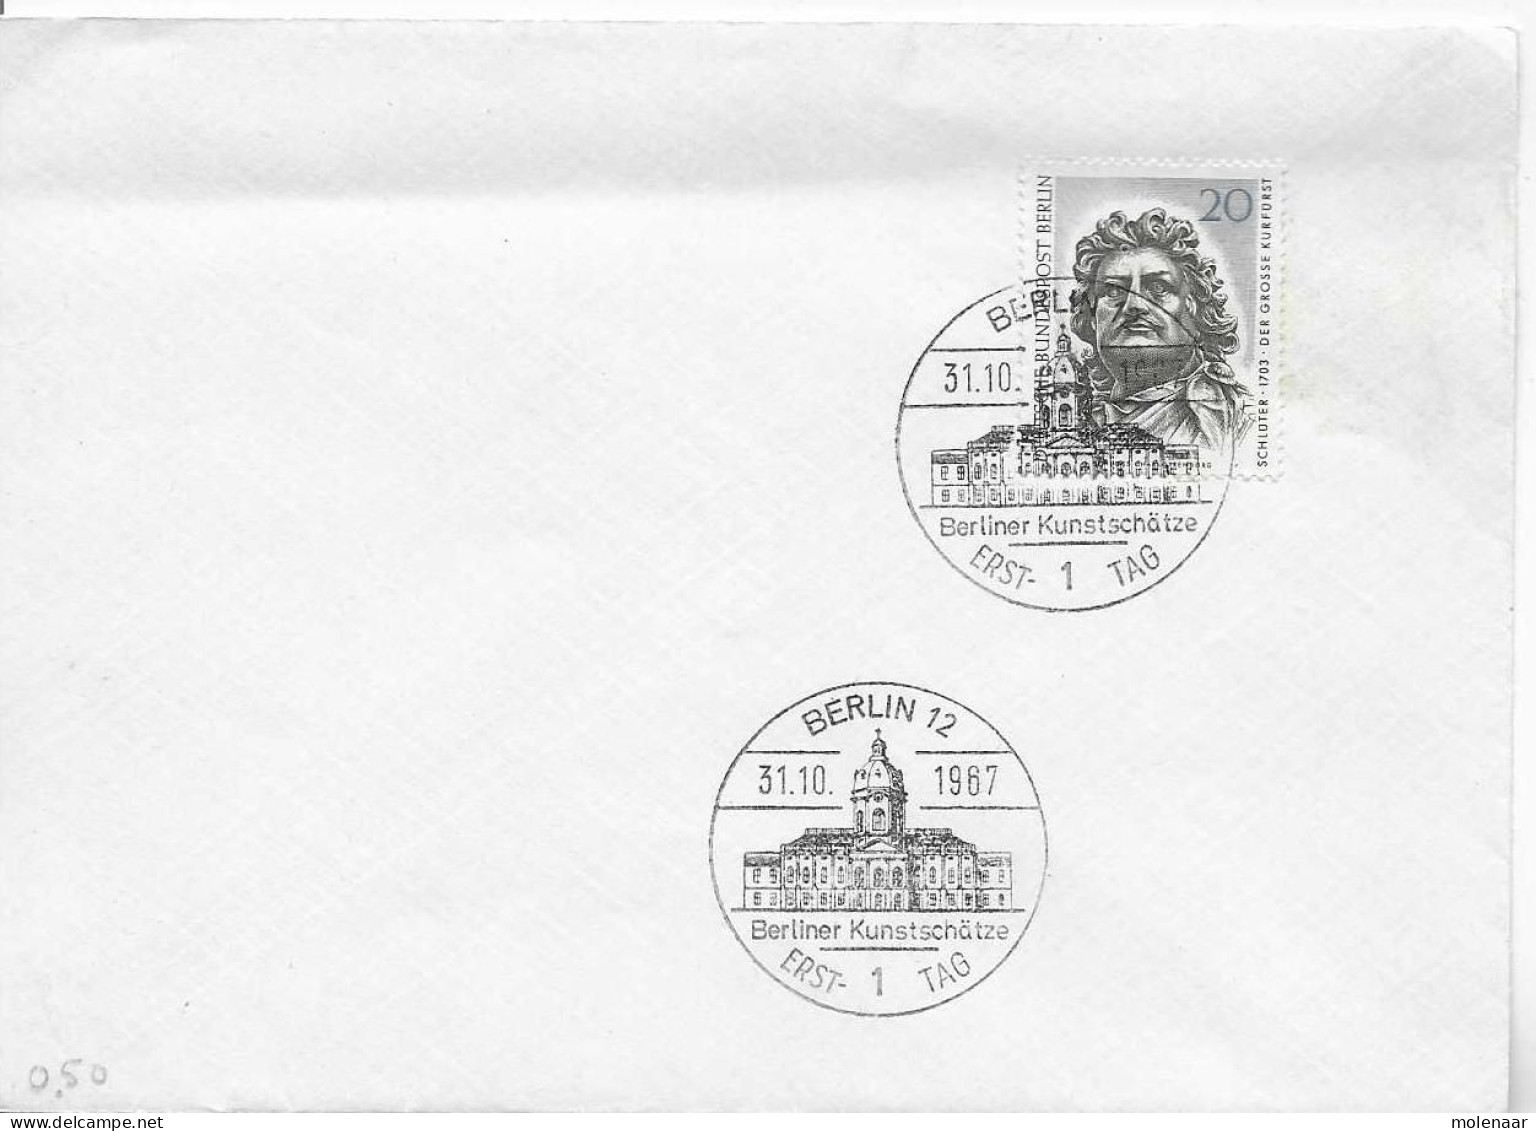 Postzegels > Europa > Duitsland > Berlijn > 1e Dag FDC (brieven) > 1948-1970 Met No. 303 (17155) - Blocs